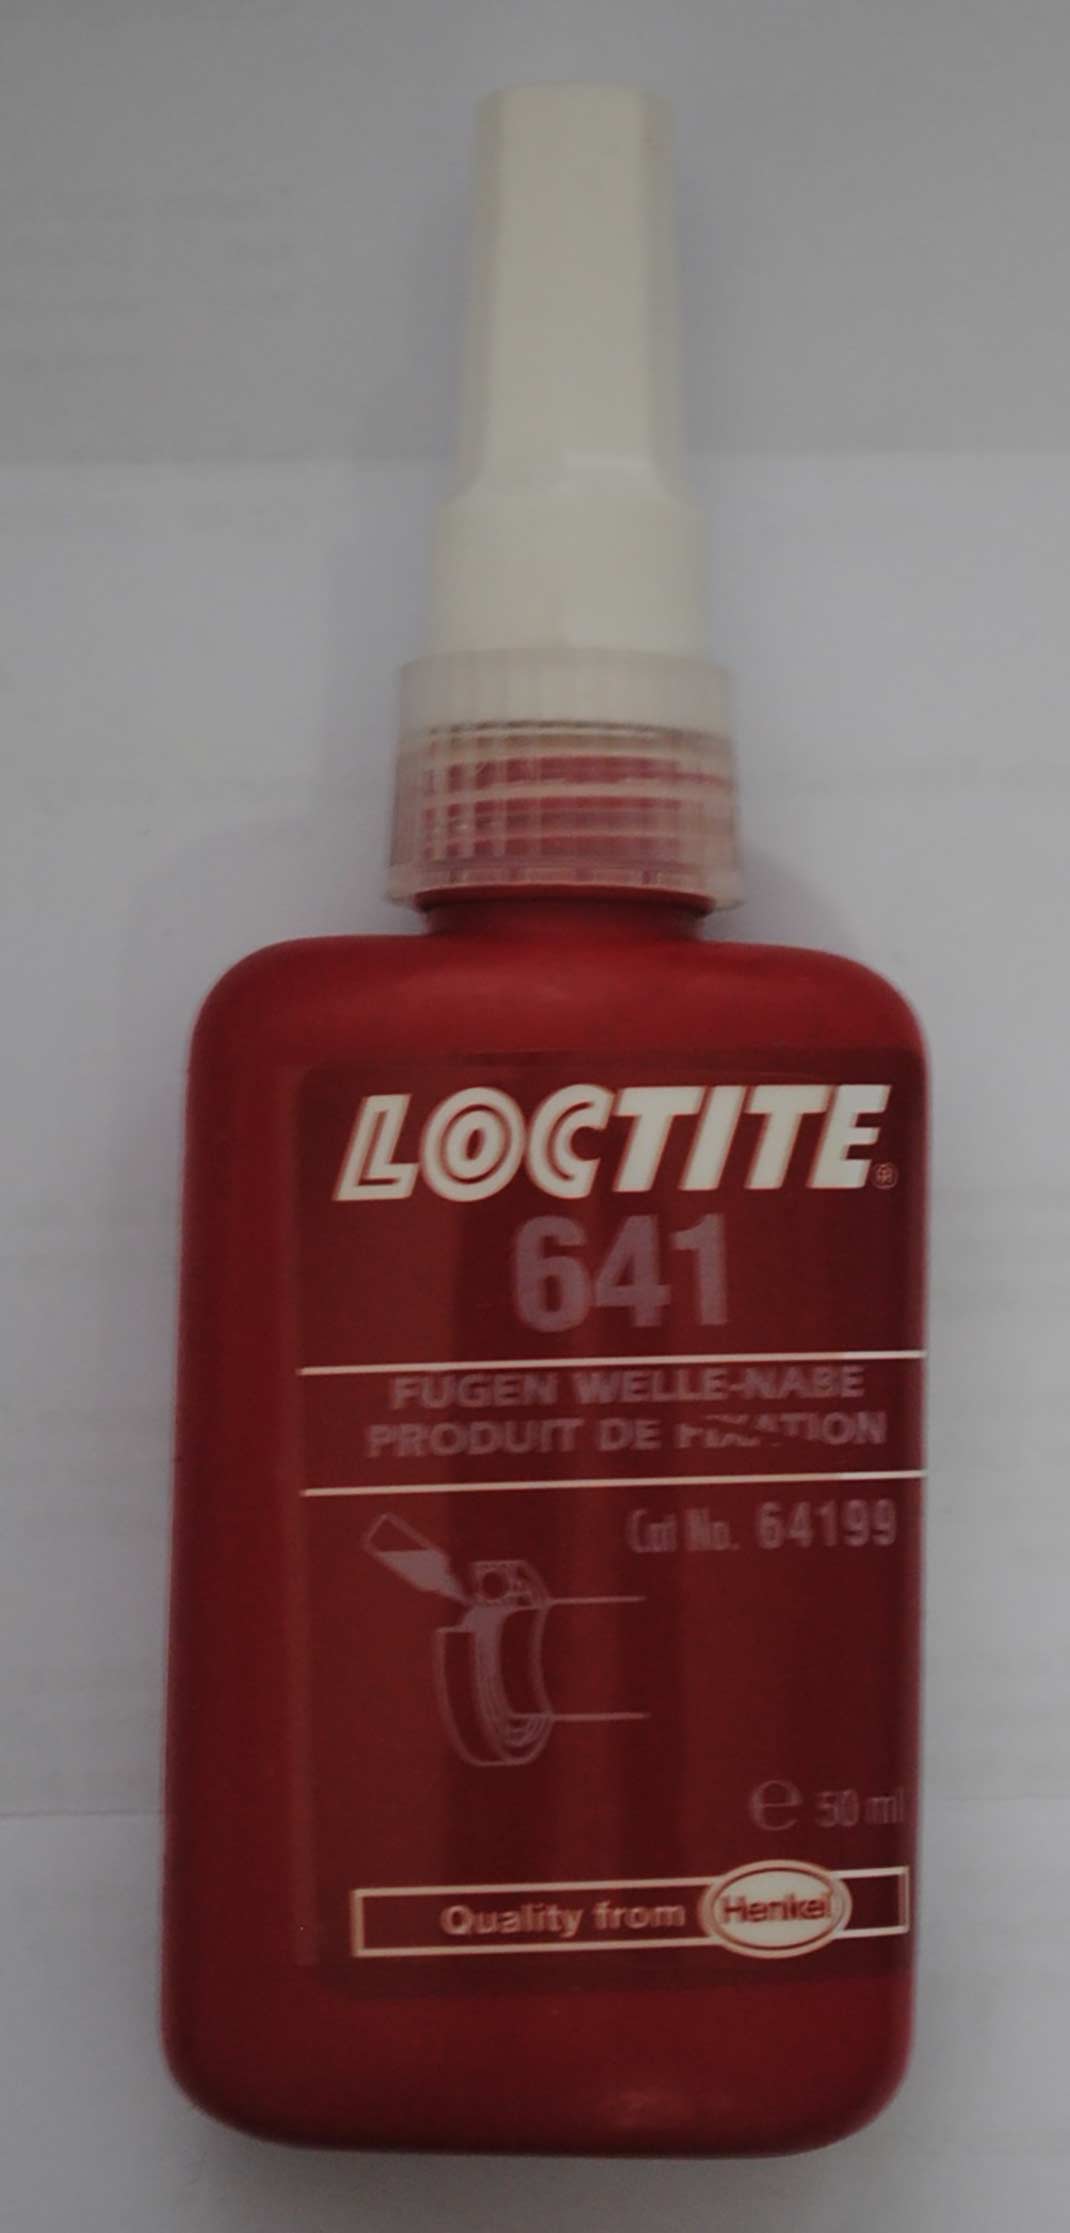 Loctite 641 (Demontage notwendig)